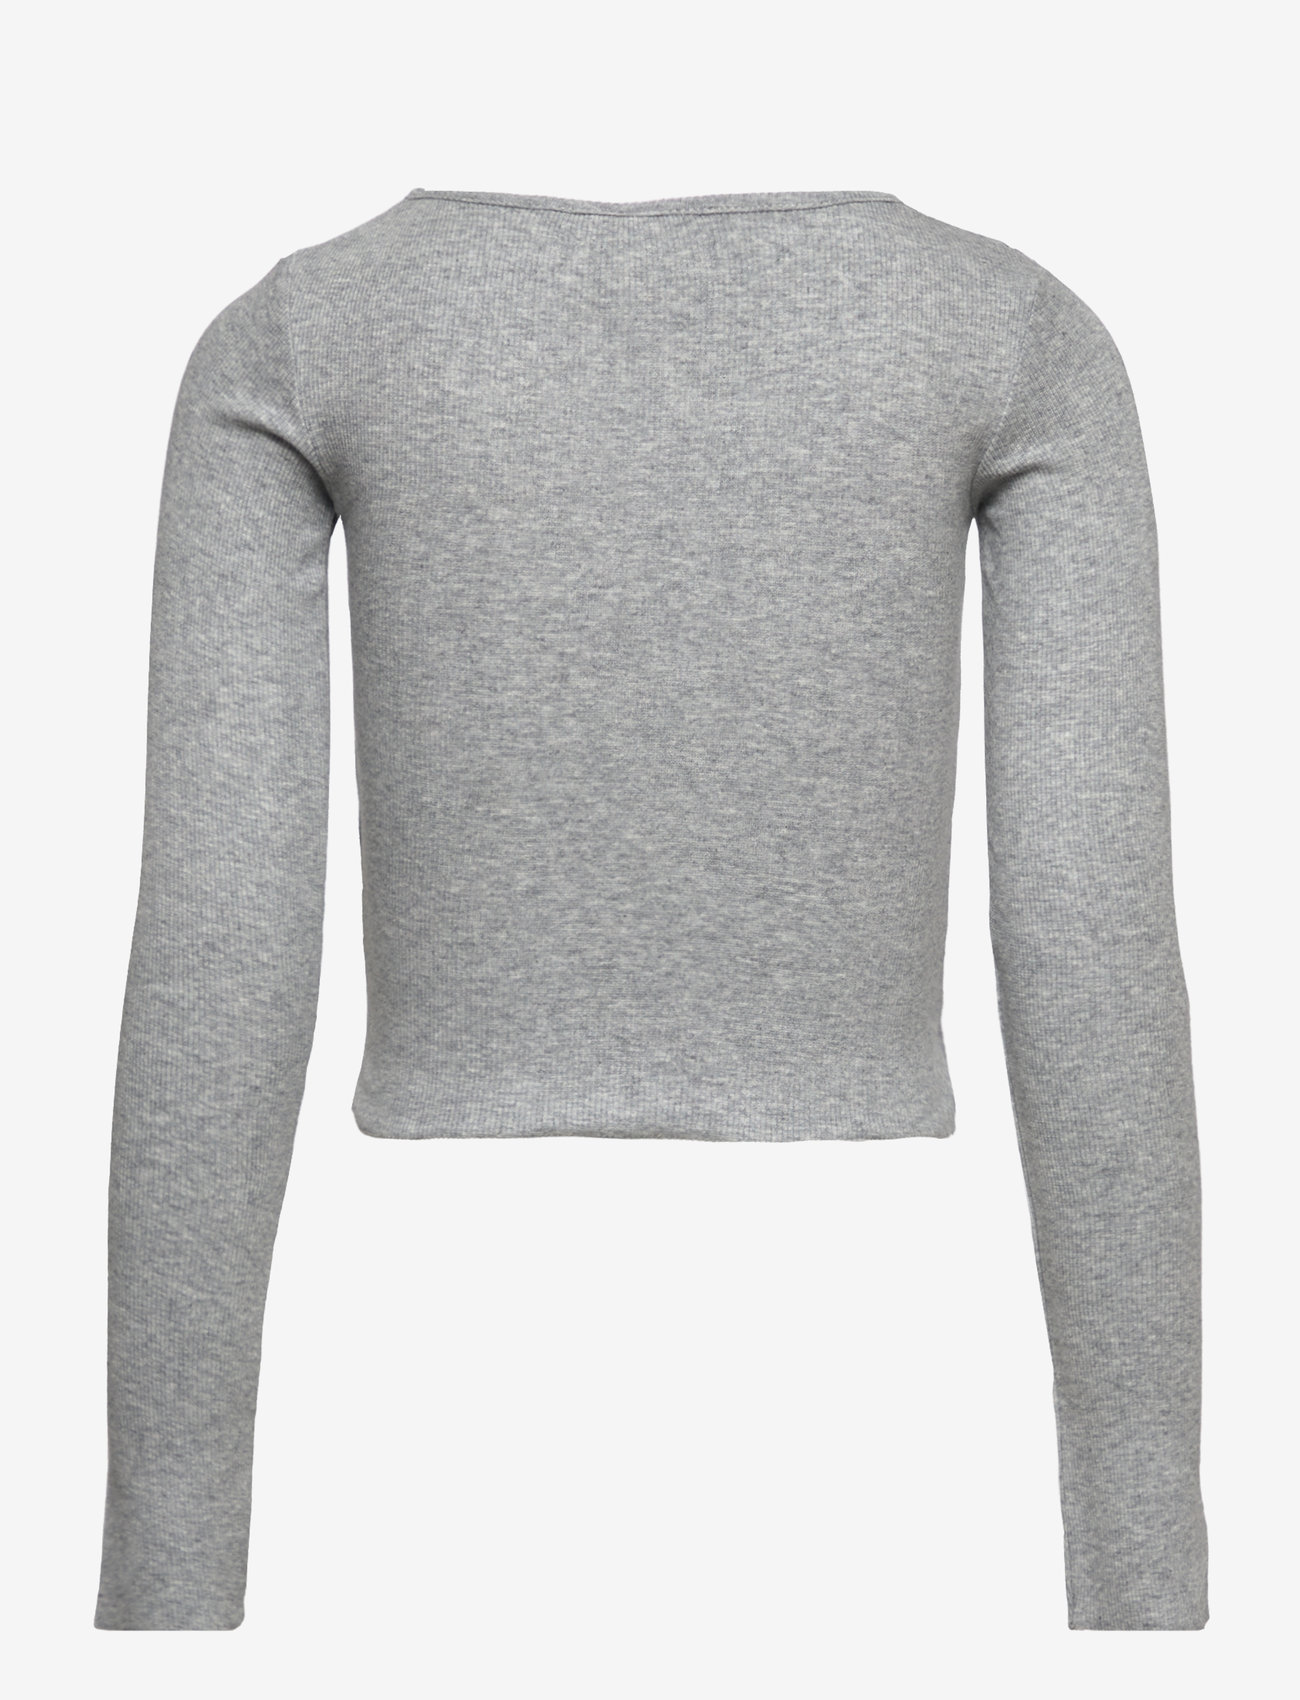 Sofie Schnoor Young - T-shirt long-sleeve - langærmede t-shirts - grey melange - 1